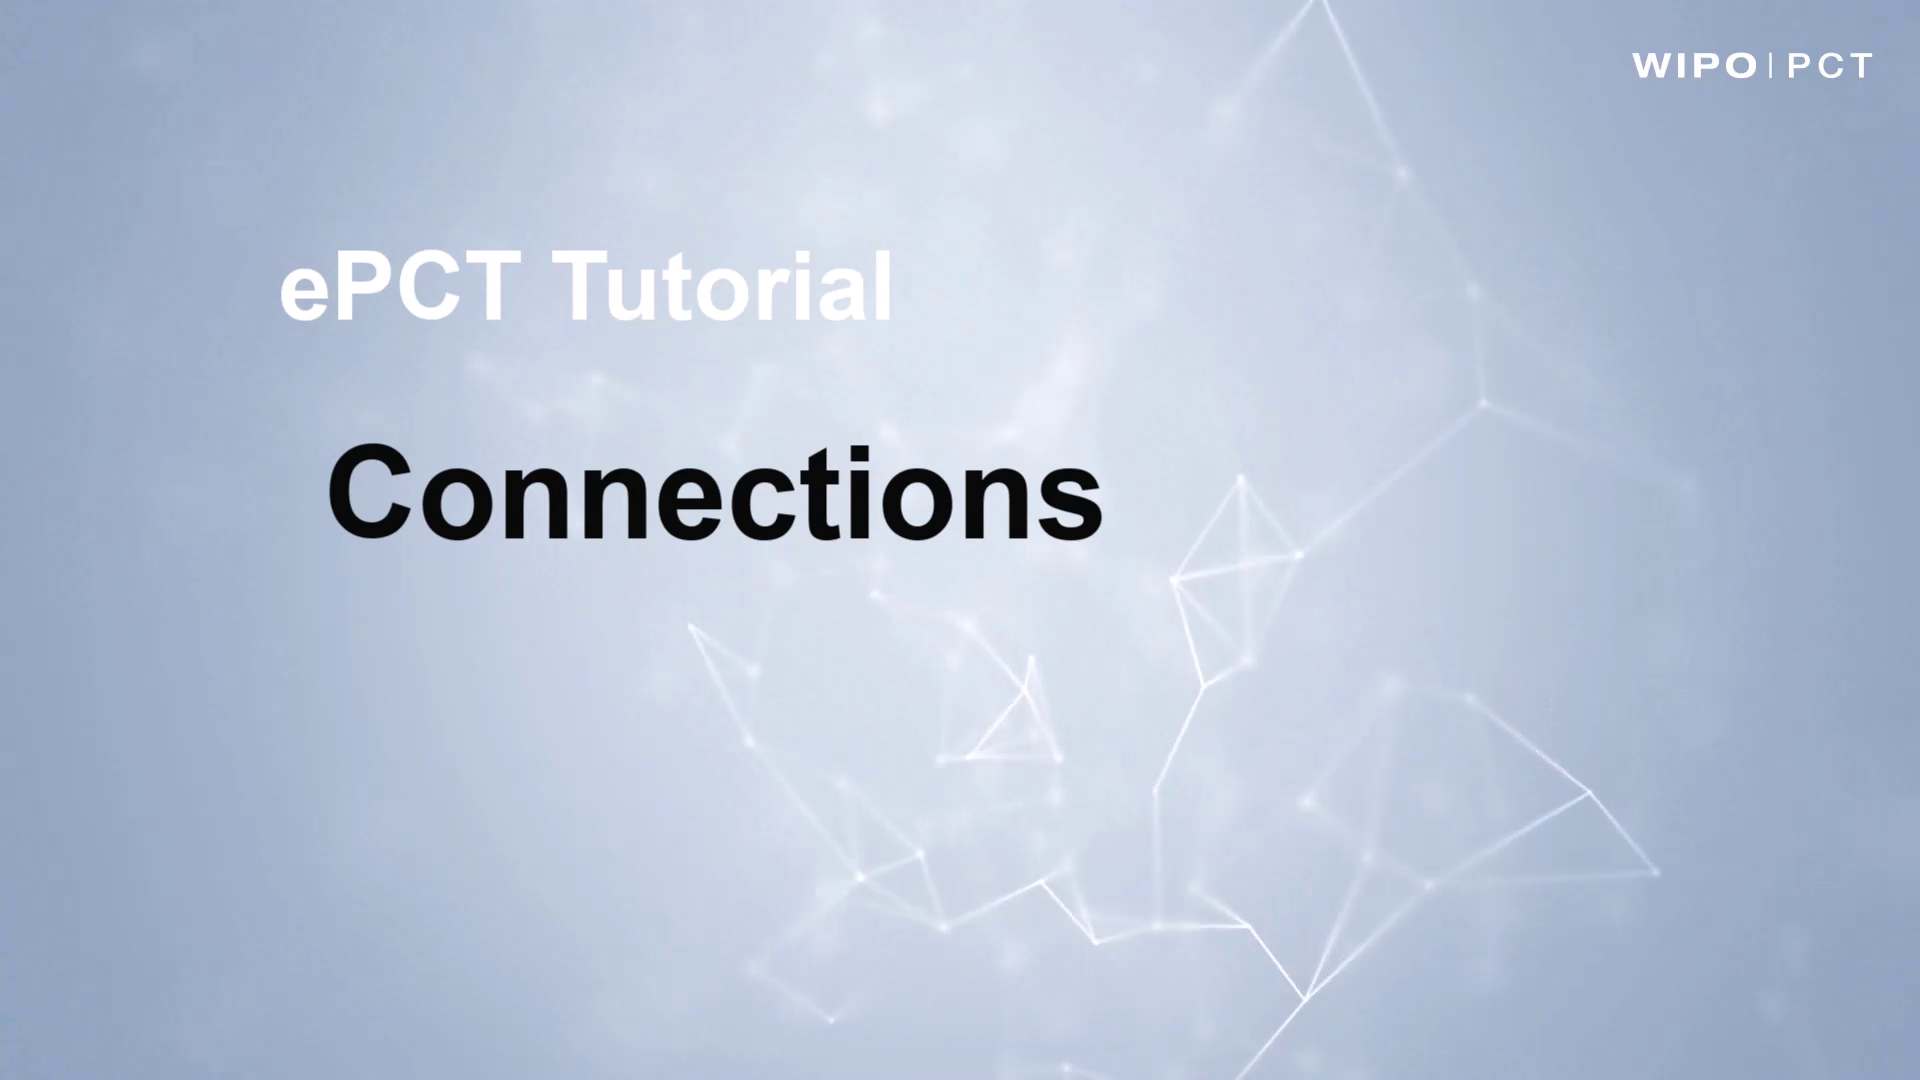 ePCT Video Tutorials for Applicants